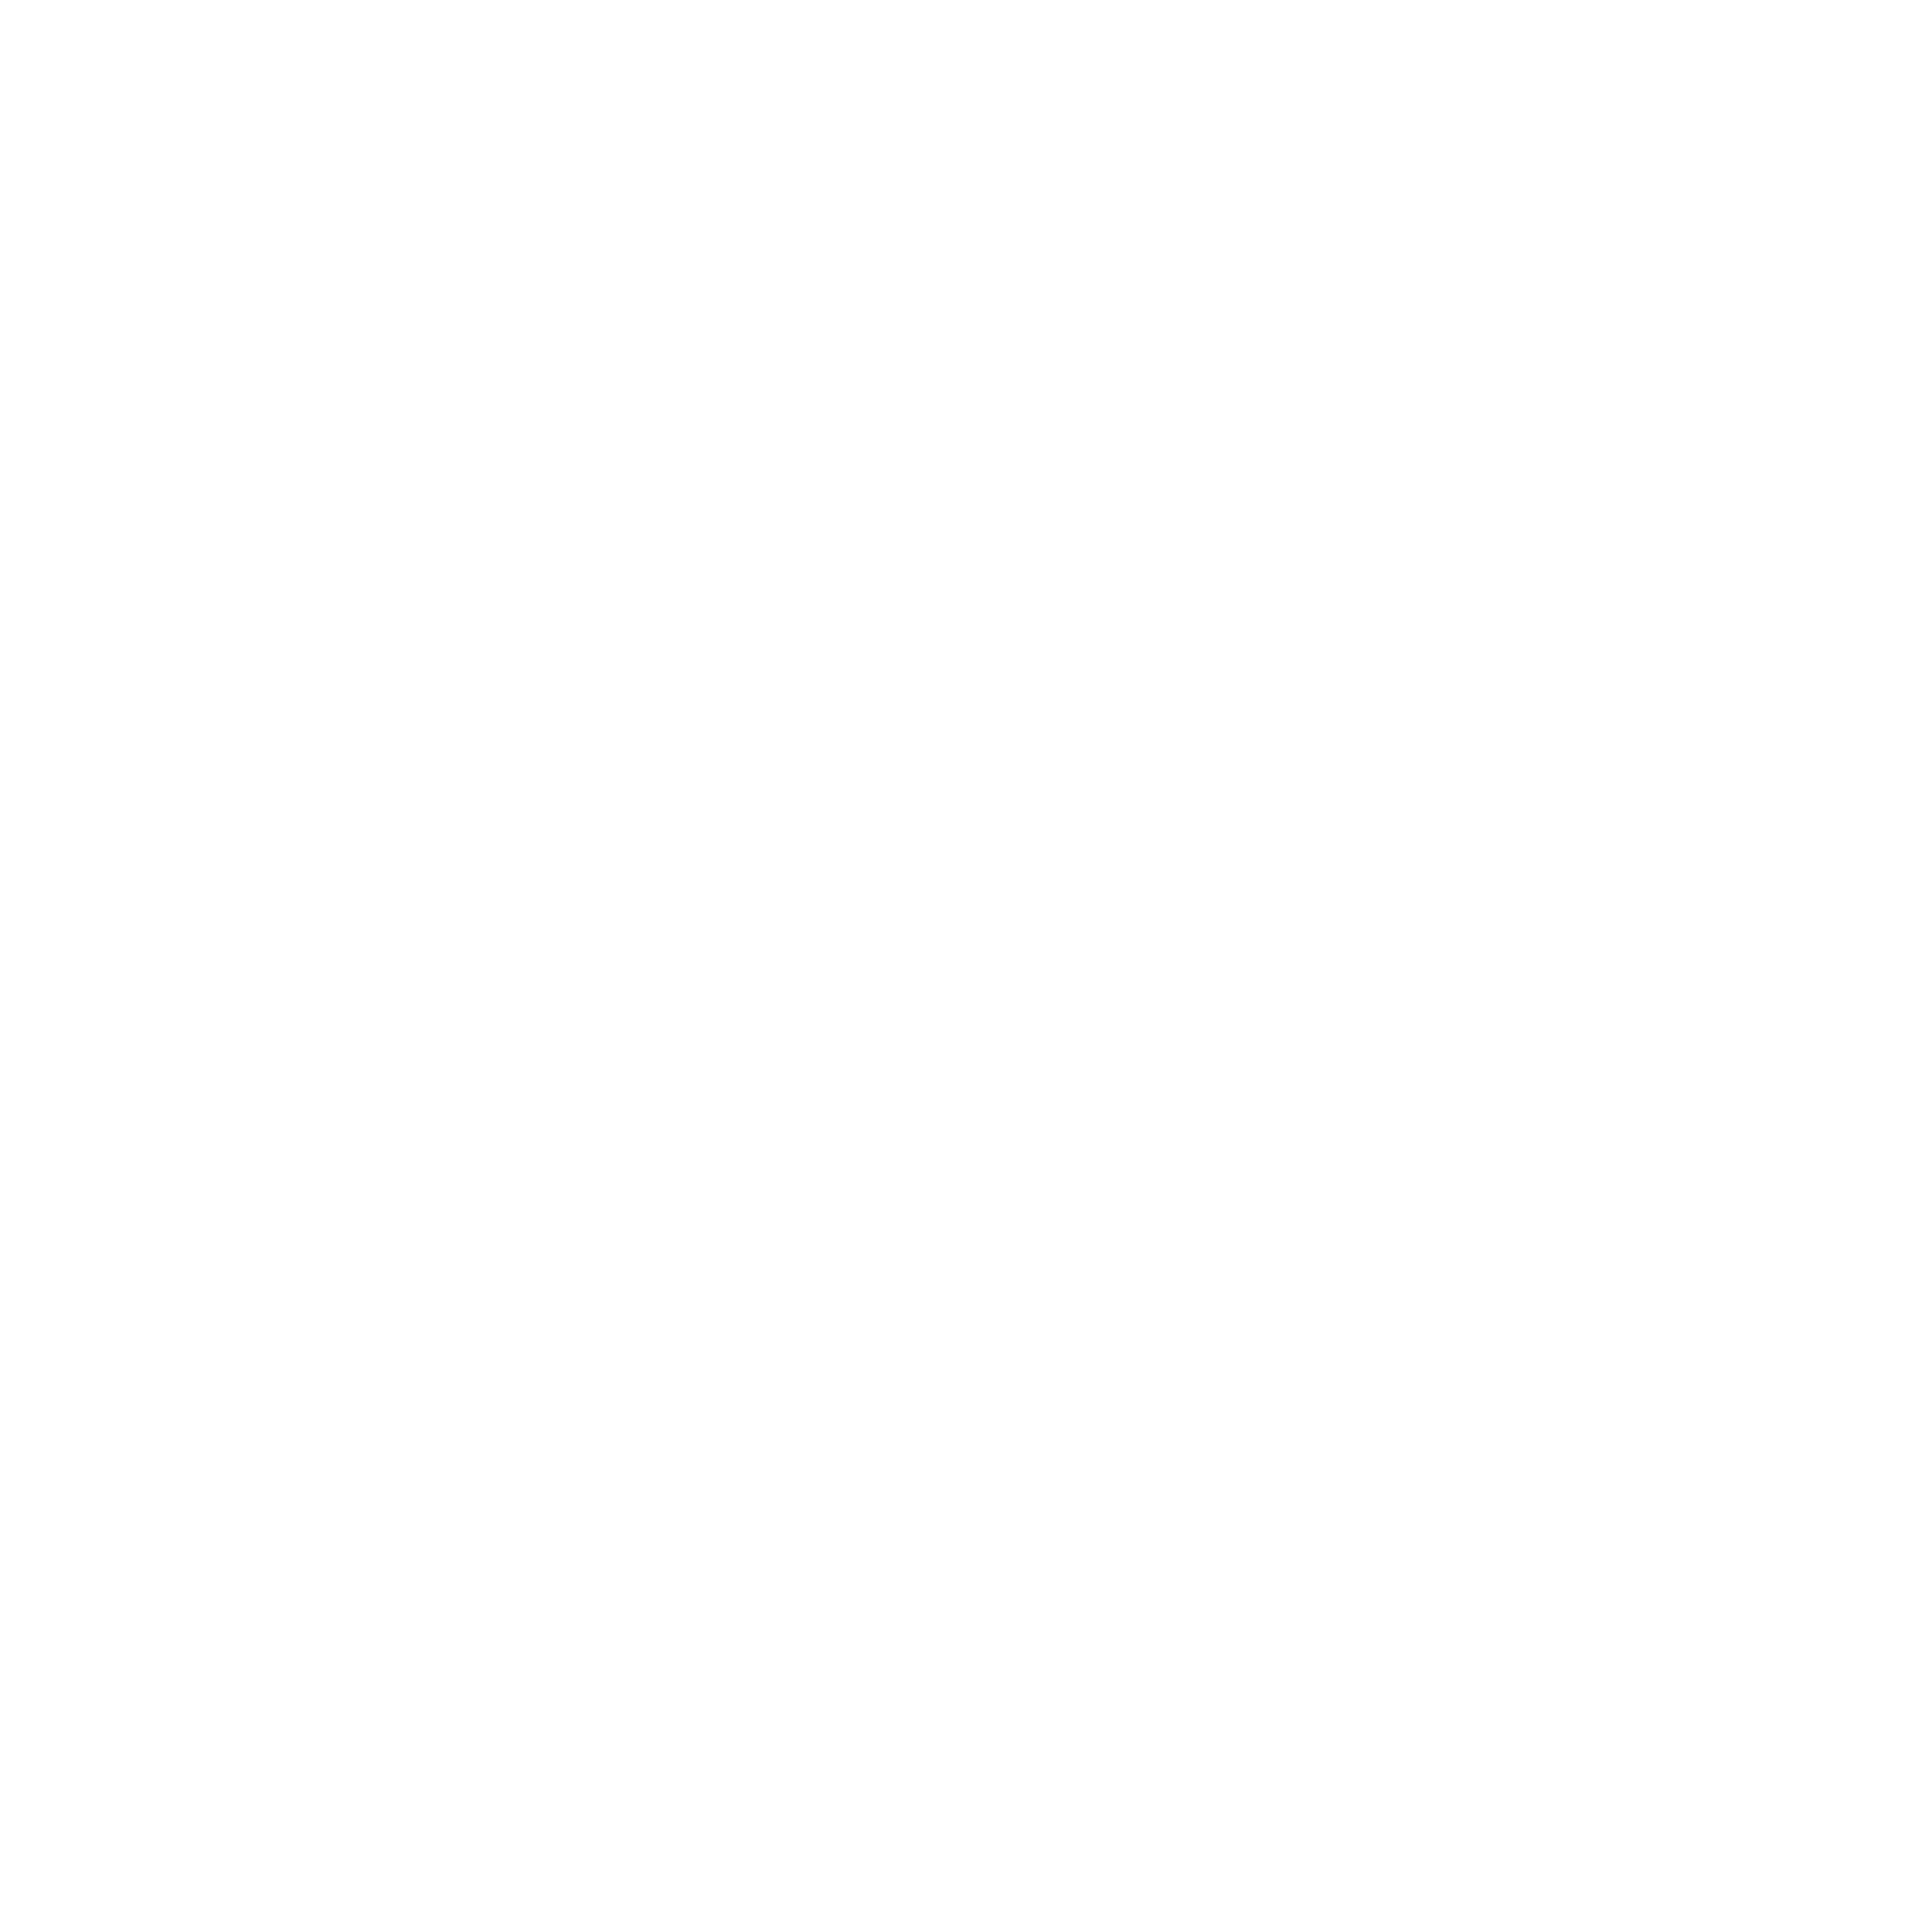 Raychem Logo - Raychem Logo PNG Transparent & SVG Vector - Freebie Supply